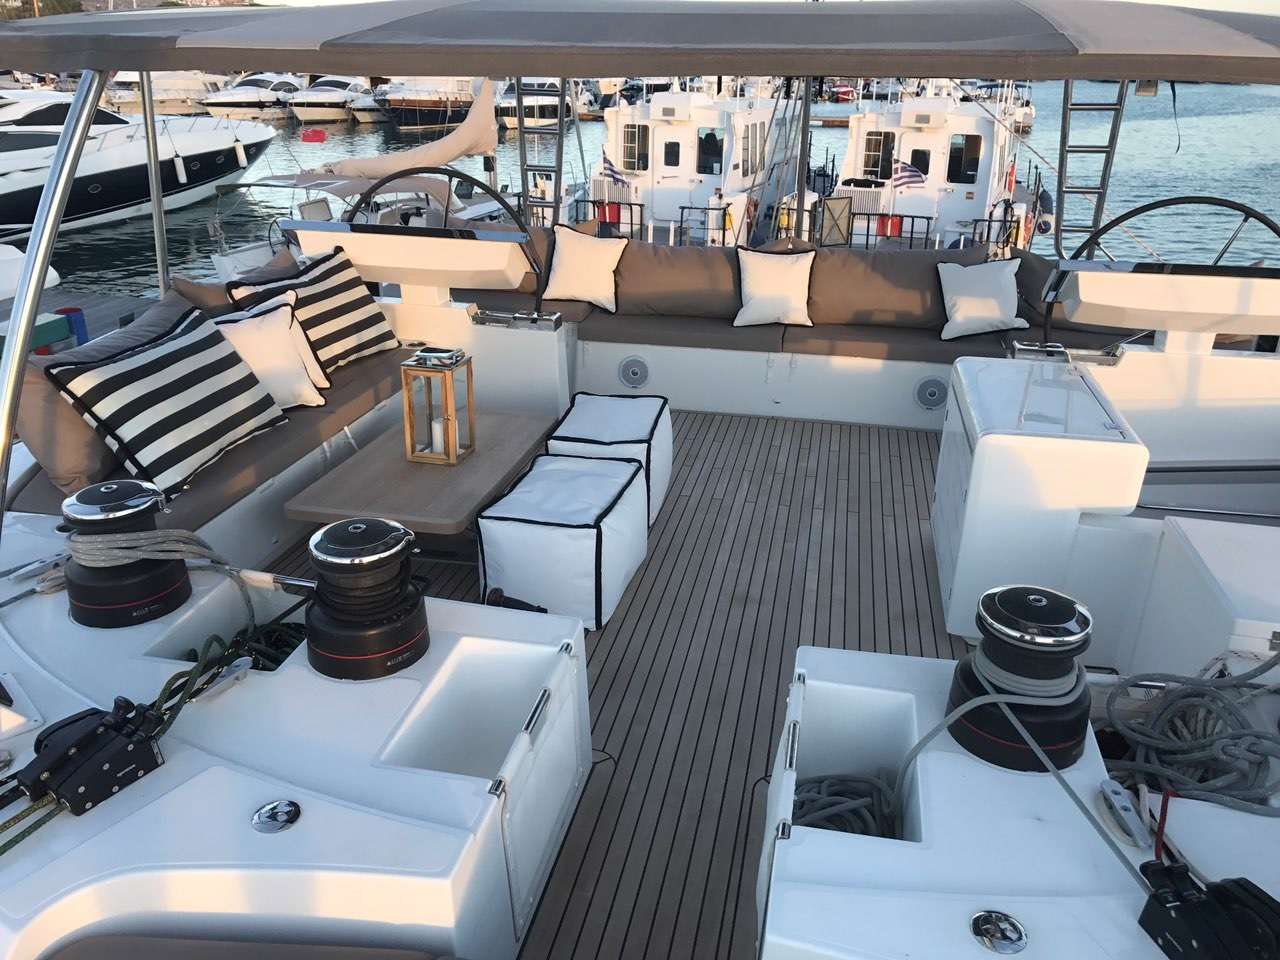 valium62 - Luxury yacht charter worldwide & Boat hire in Greece 5